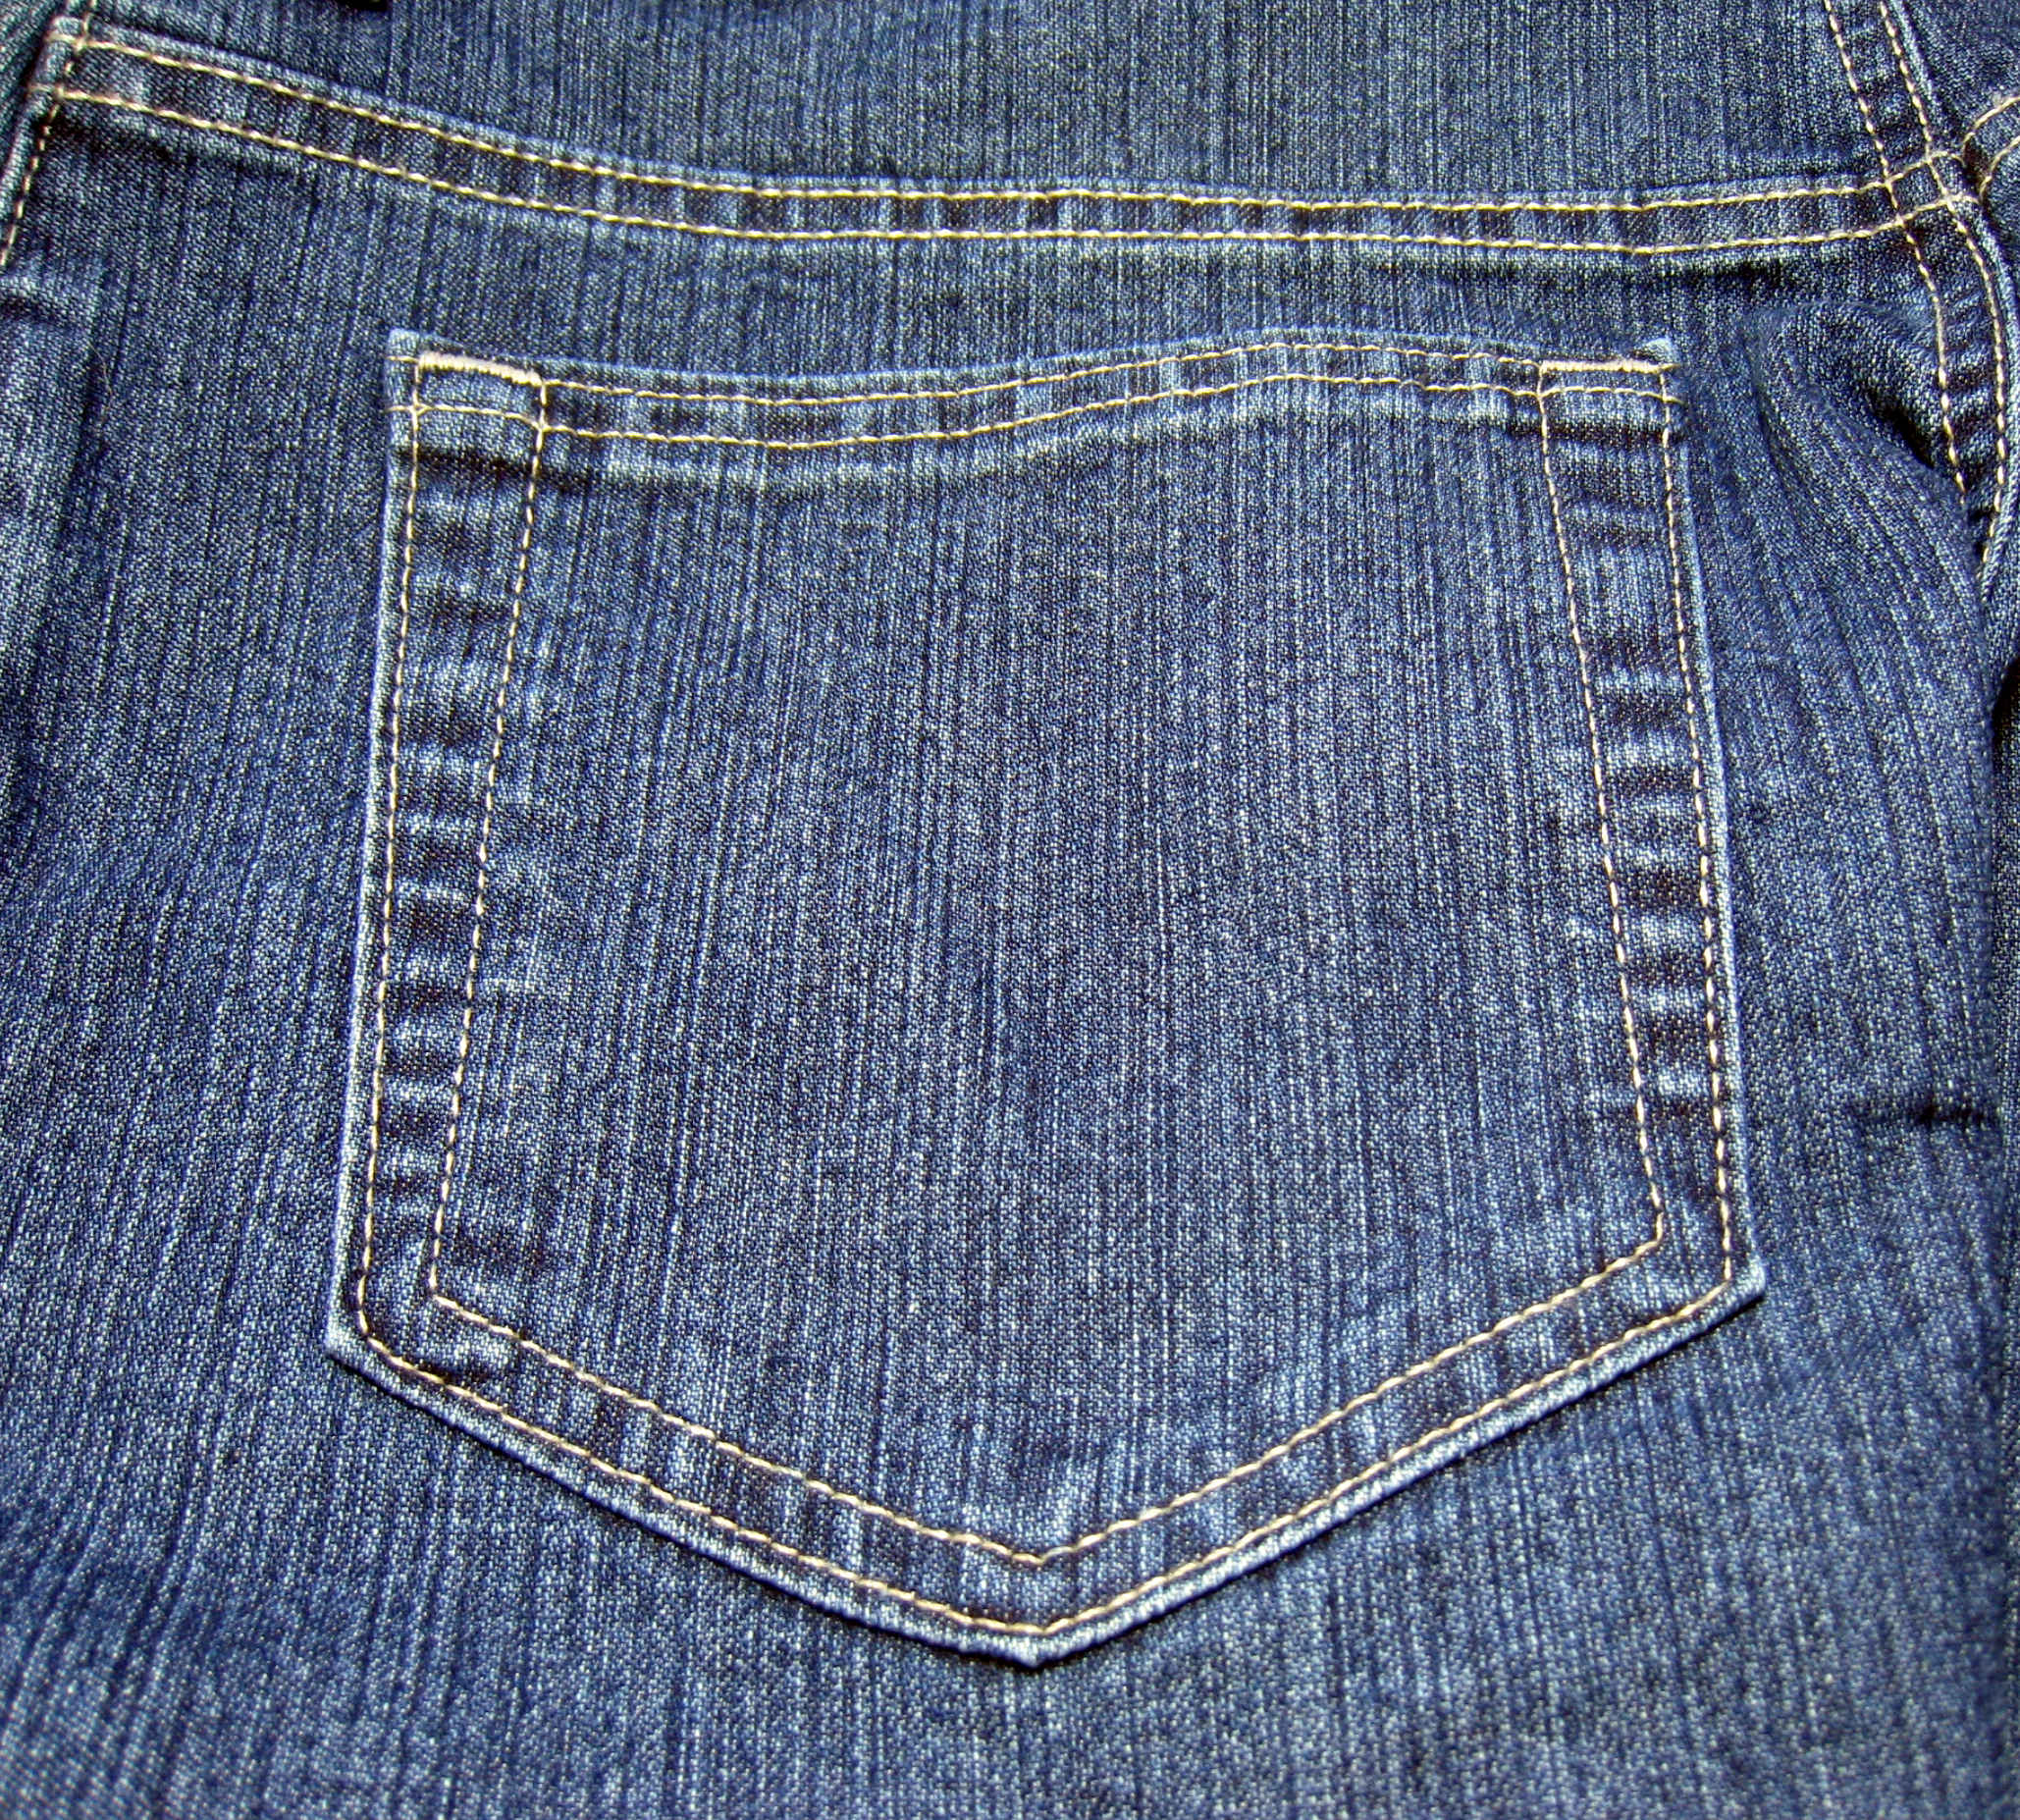 File:Jeans pocket back.jpg - Wikimedia Commons